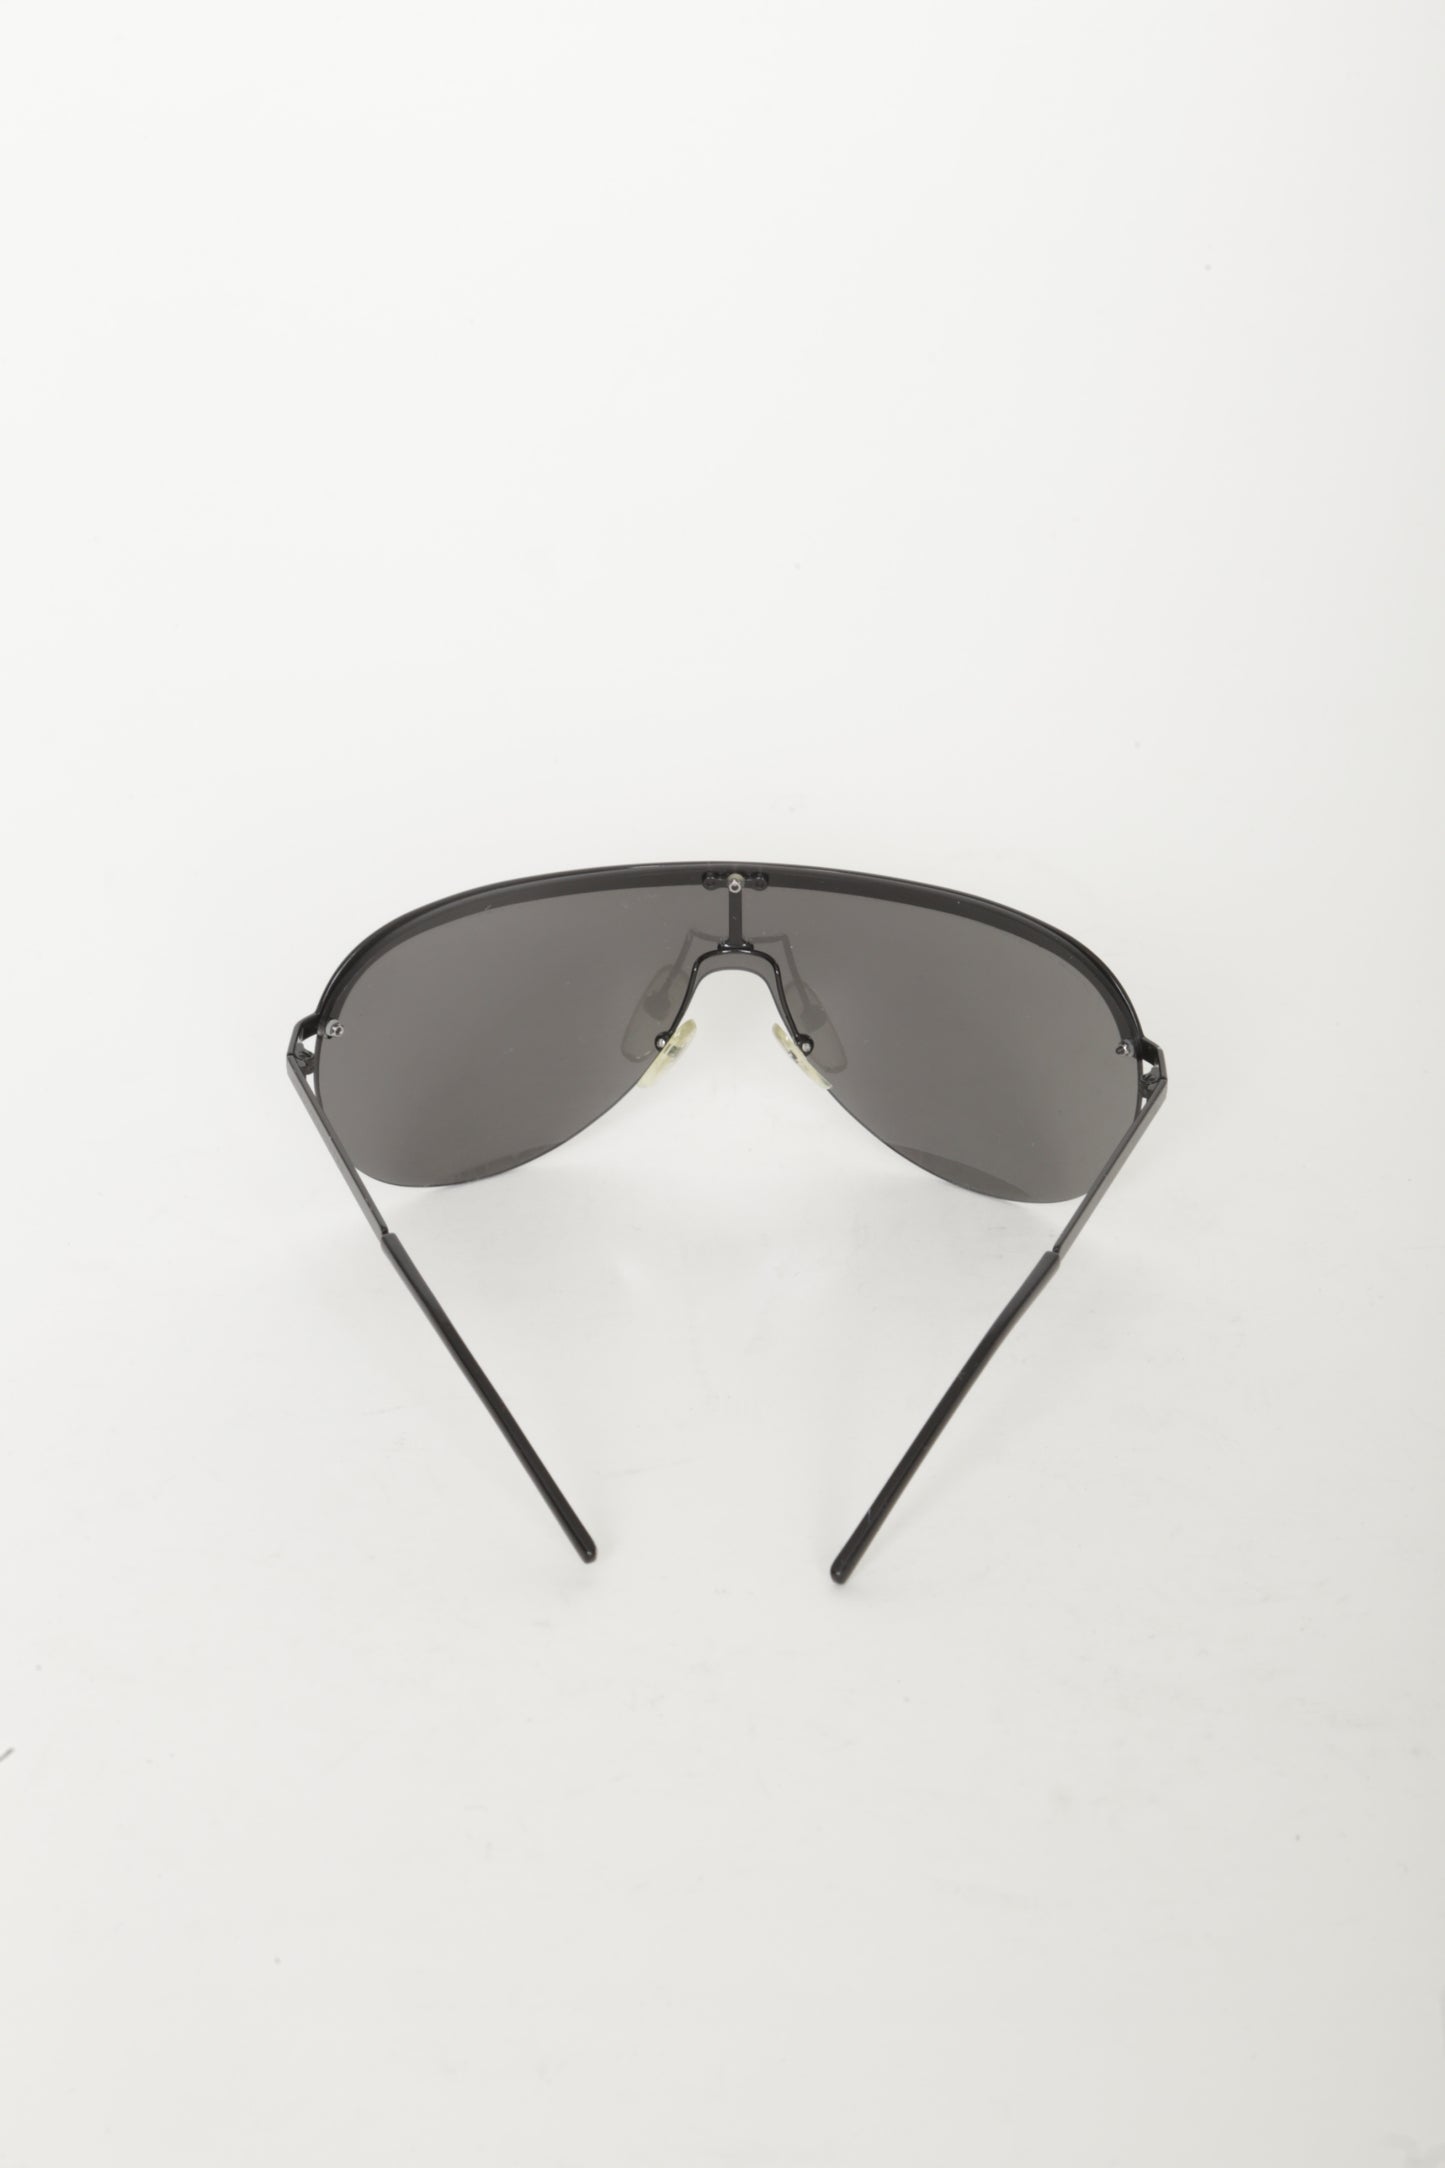 Stella McCartney Unisex Black Sunglasses Size O/S